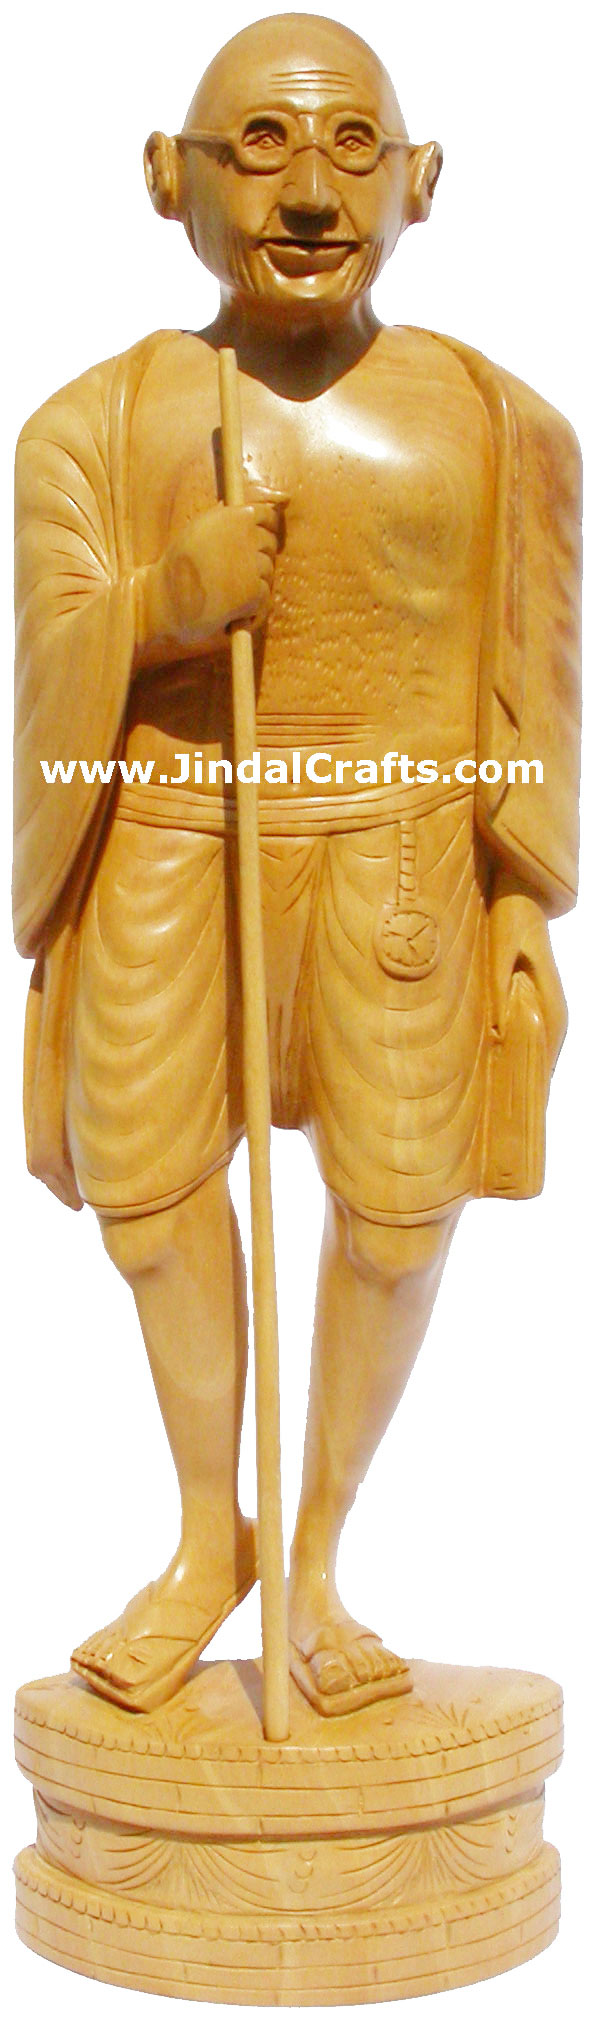 Hand Carved Wooden Mahatma Gandhi Statue Indian Art Work Sculpture Figurine Art